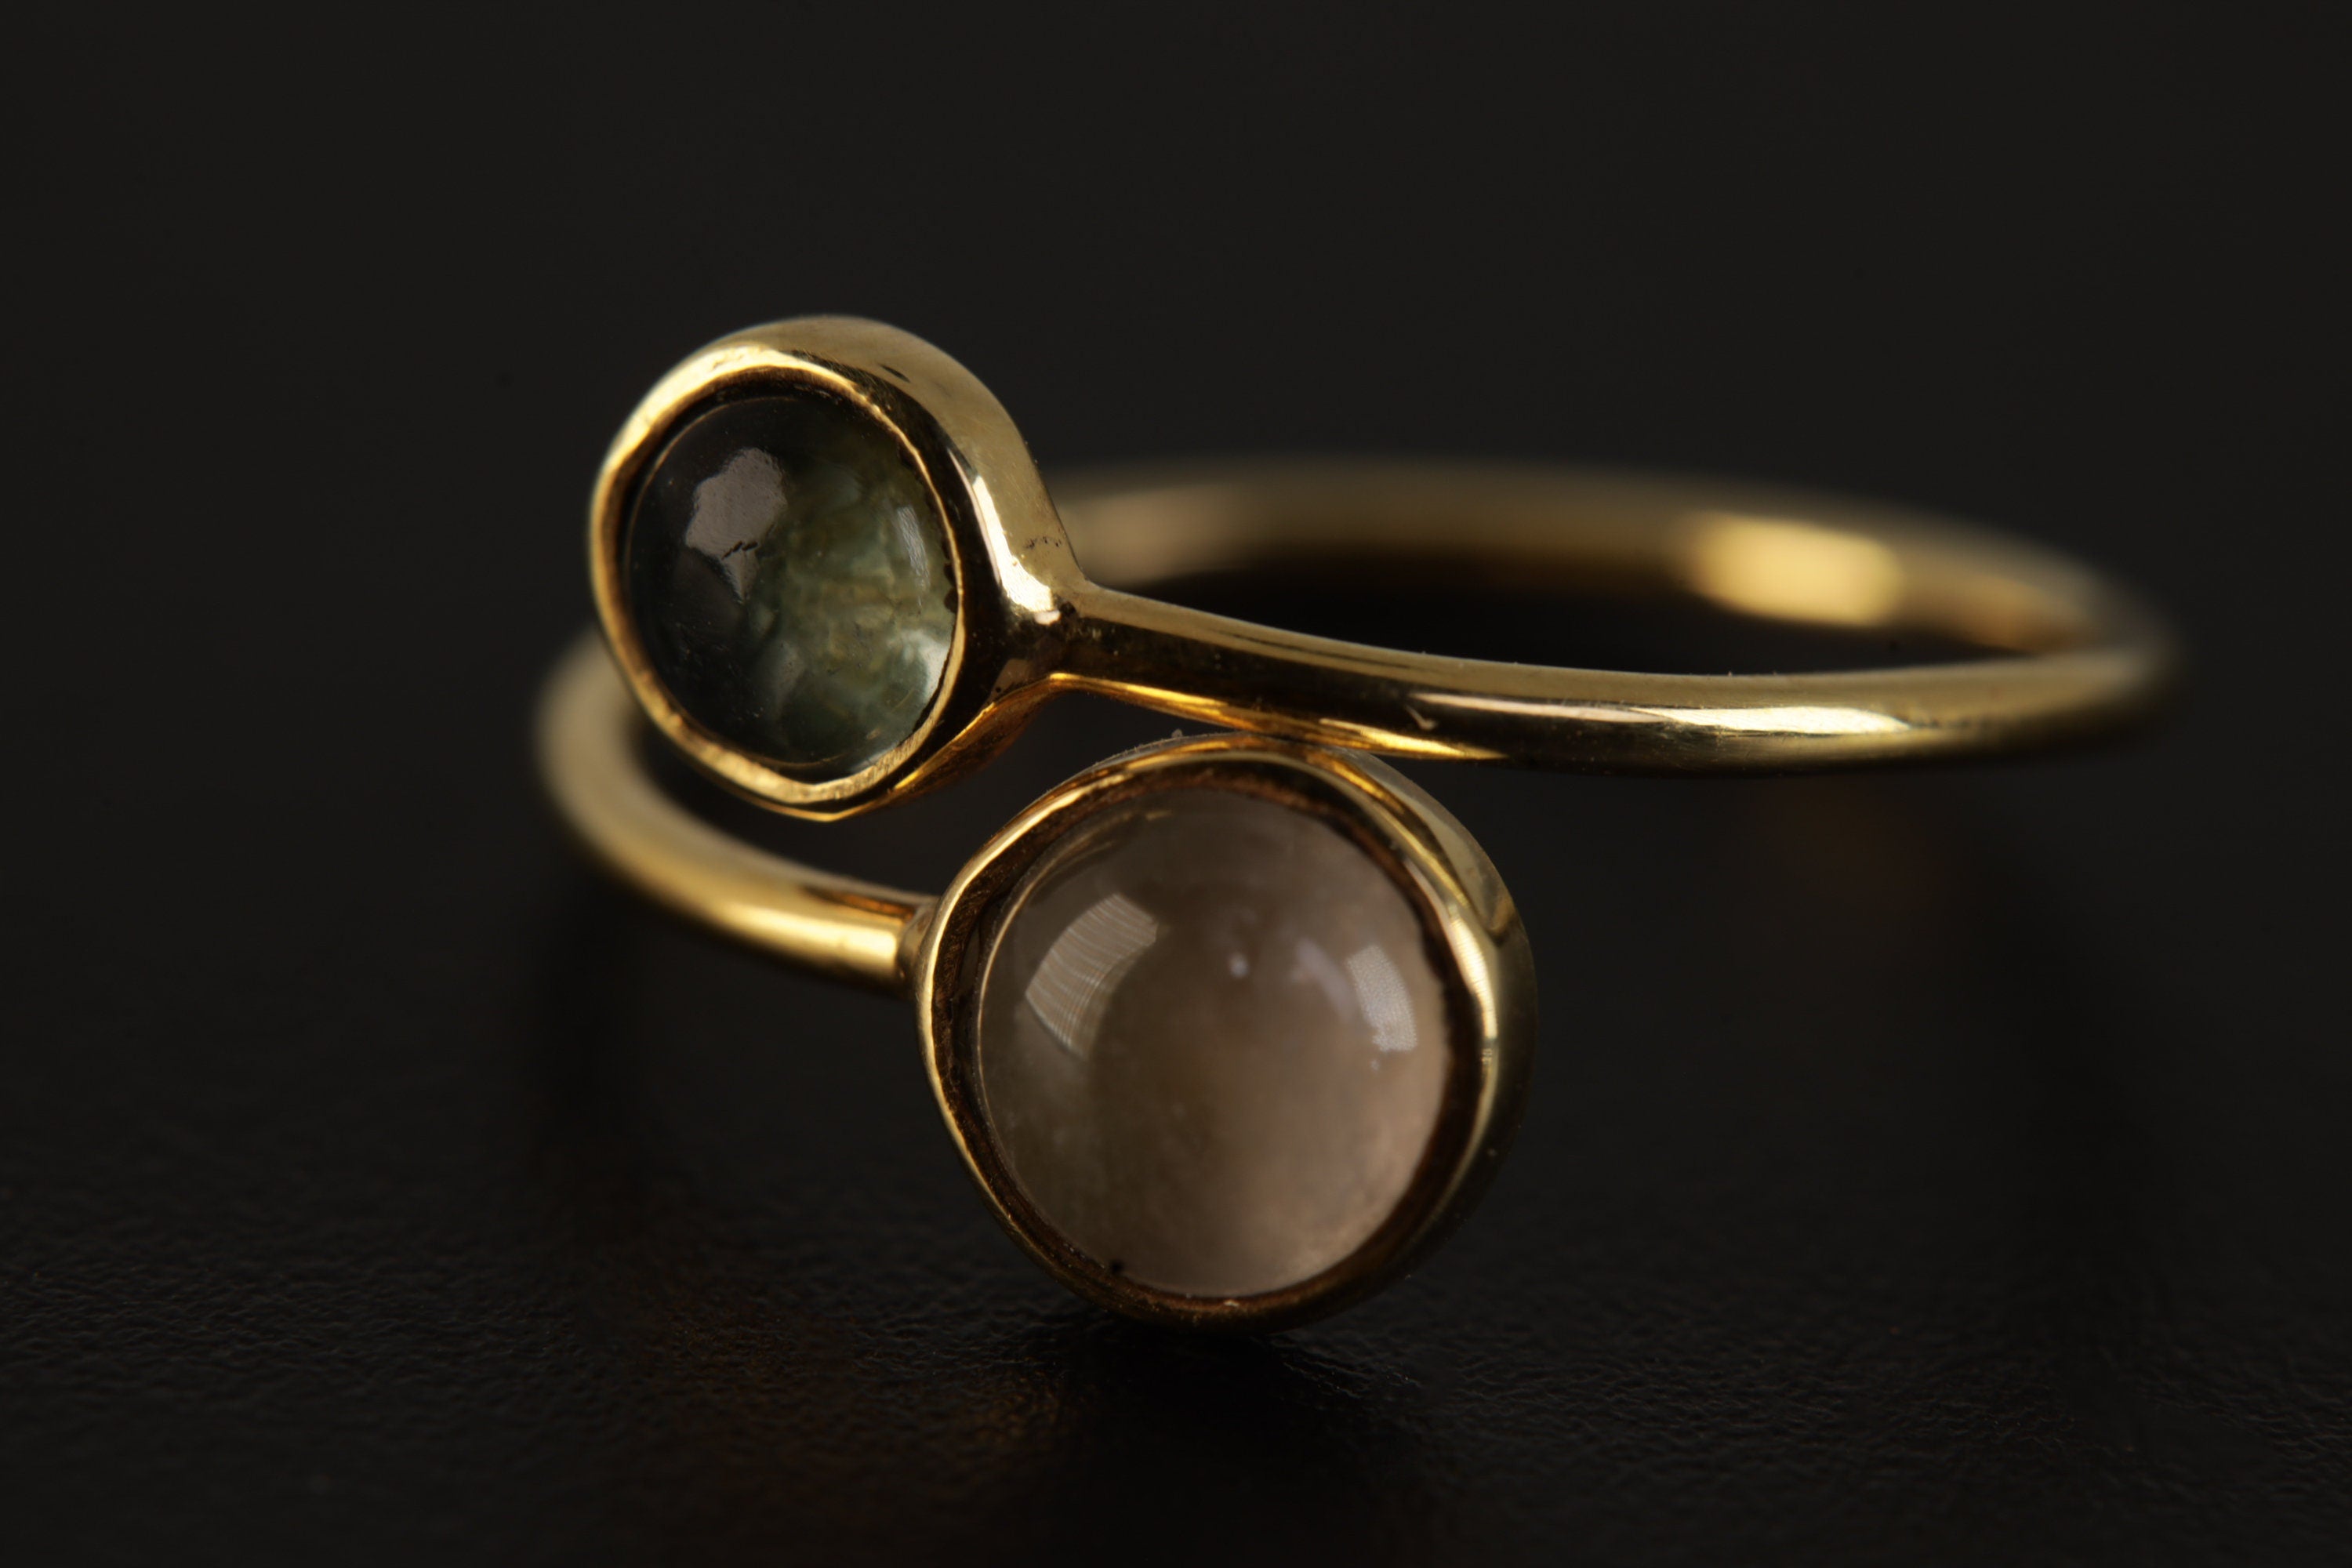 Golden Eclipse Adjustable Ring - Gold Plated Sterling Silver Ring - Labradorite & Rose Quartz - Unisex - Size 5-12 US